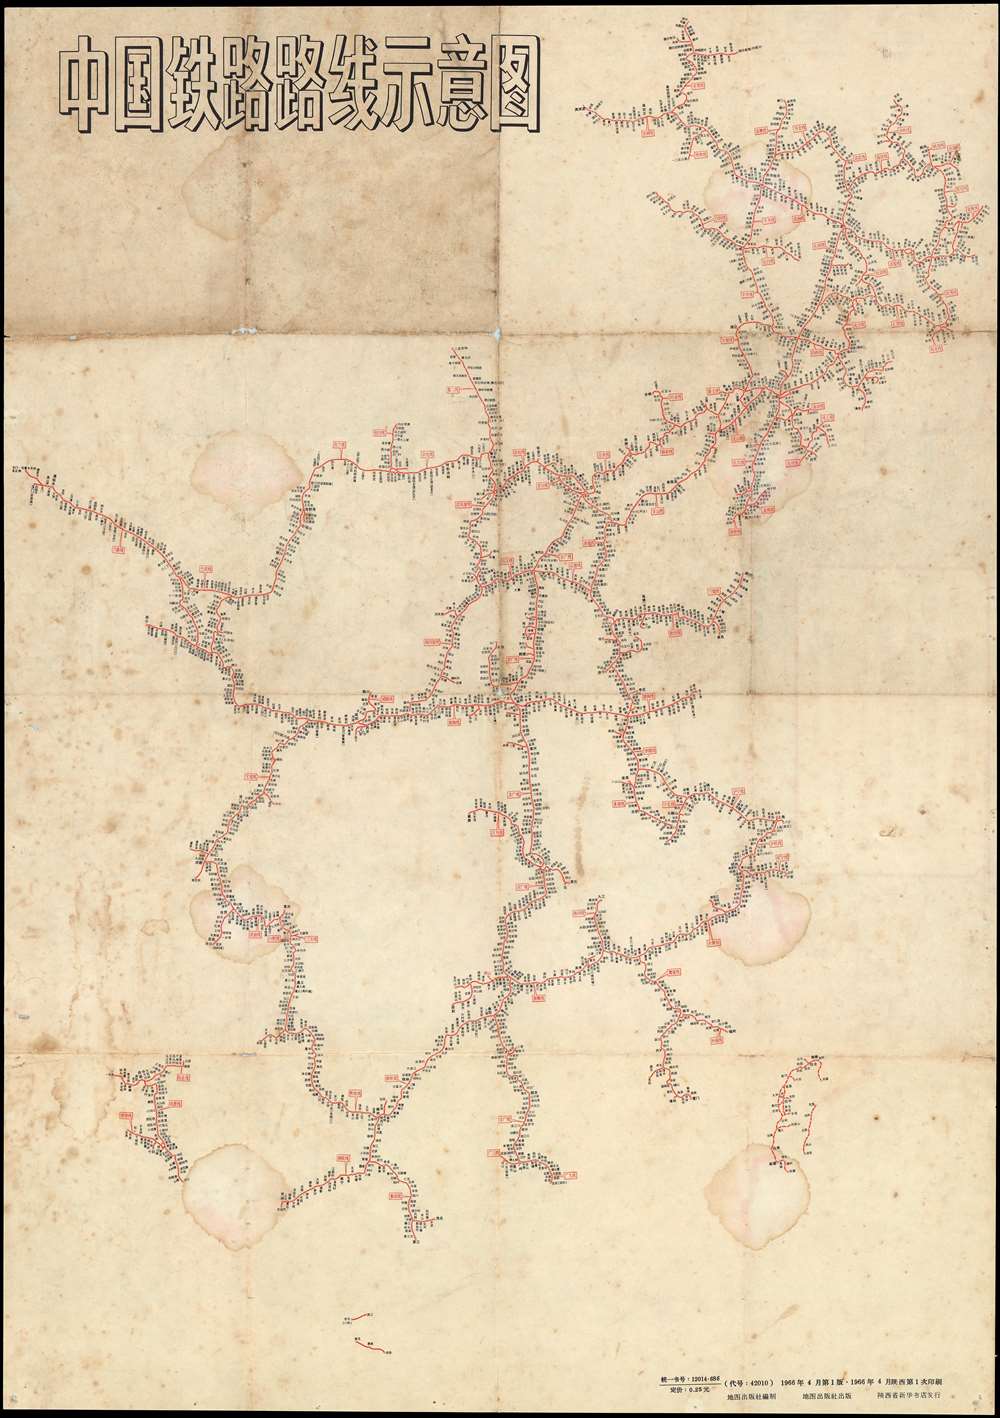 中国铁路路线示意图 / Chinese Railroad Schematic Route Map. - Main View